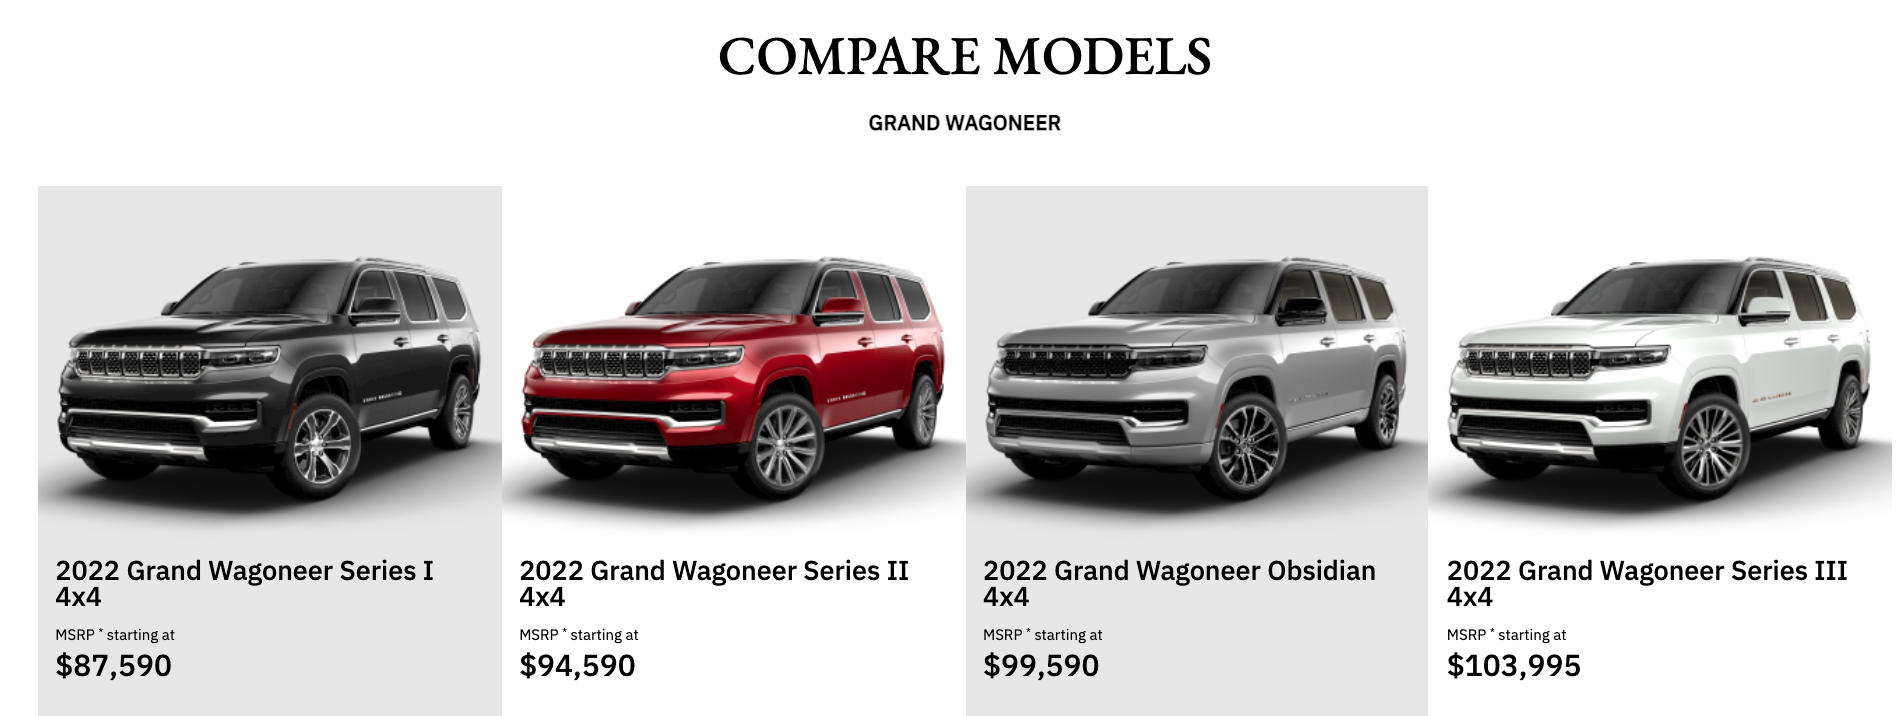 Compare Grand Wagoneer models in batavia new york